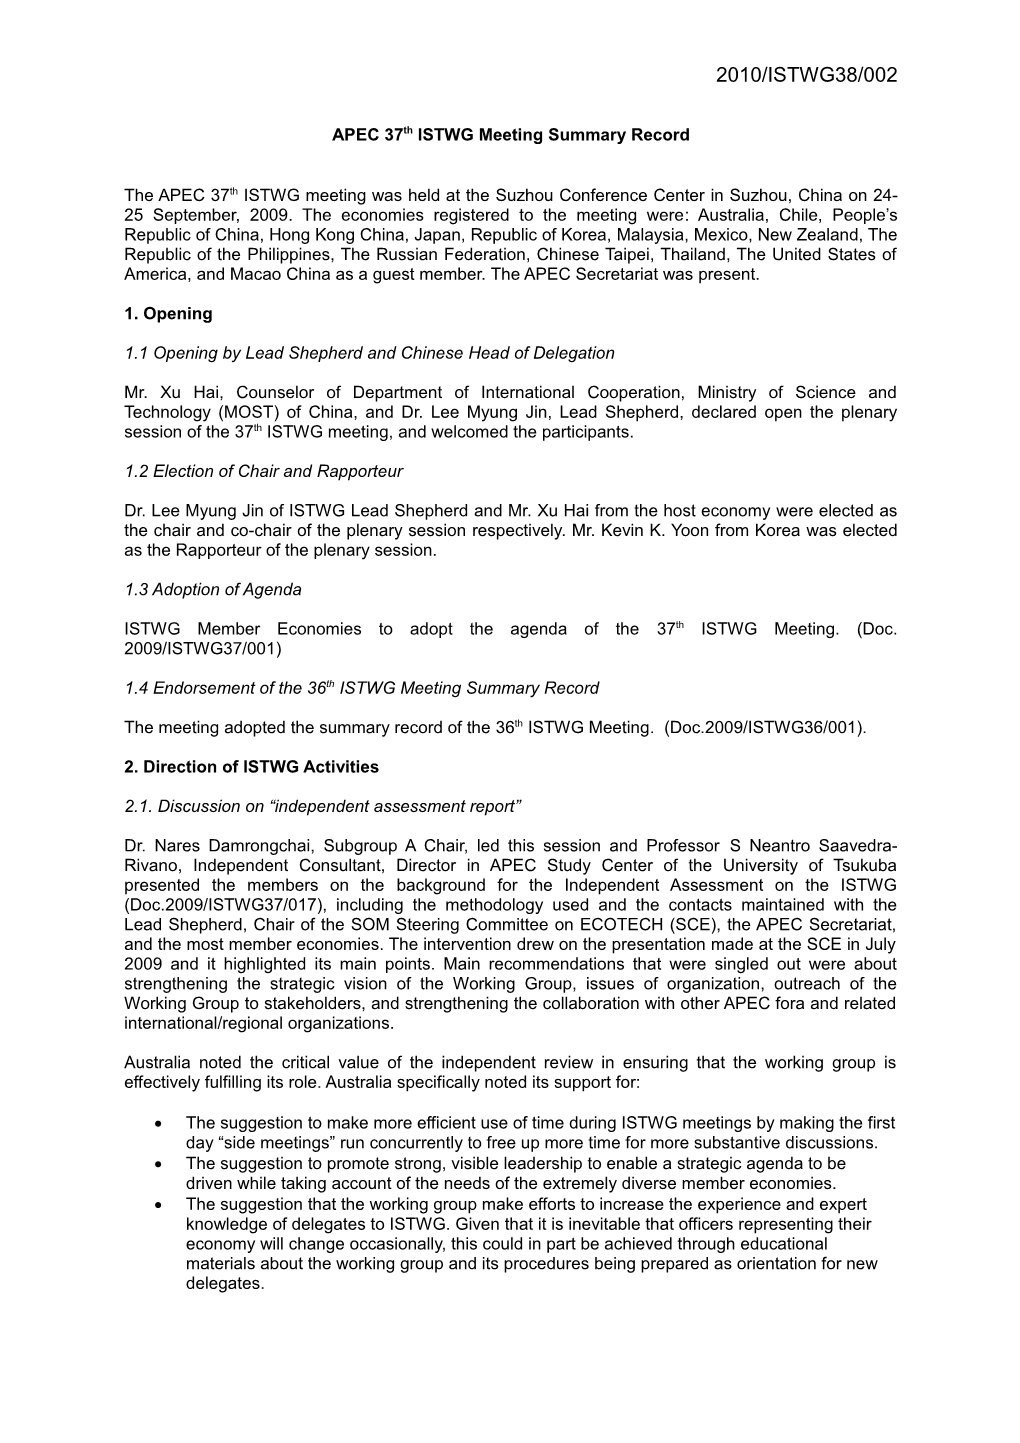 APEC 37Thistwg Meeting Summary Record